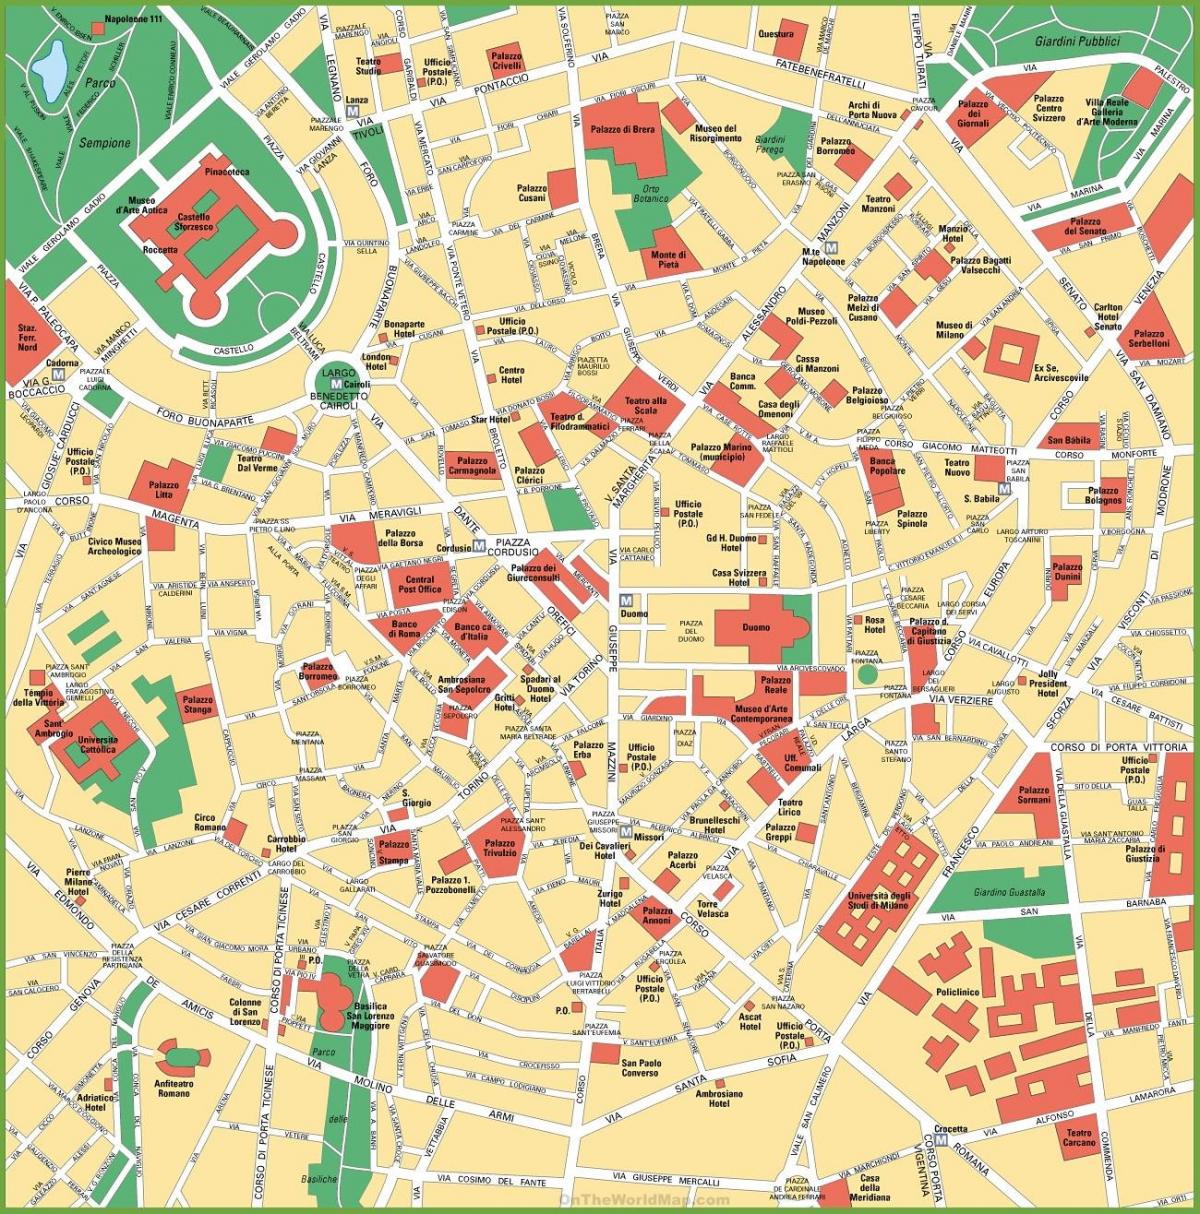 milano city center χάρτης